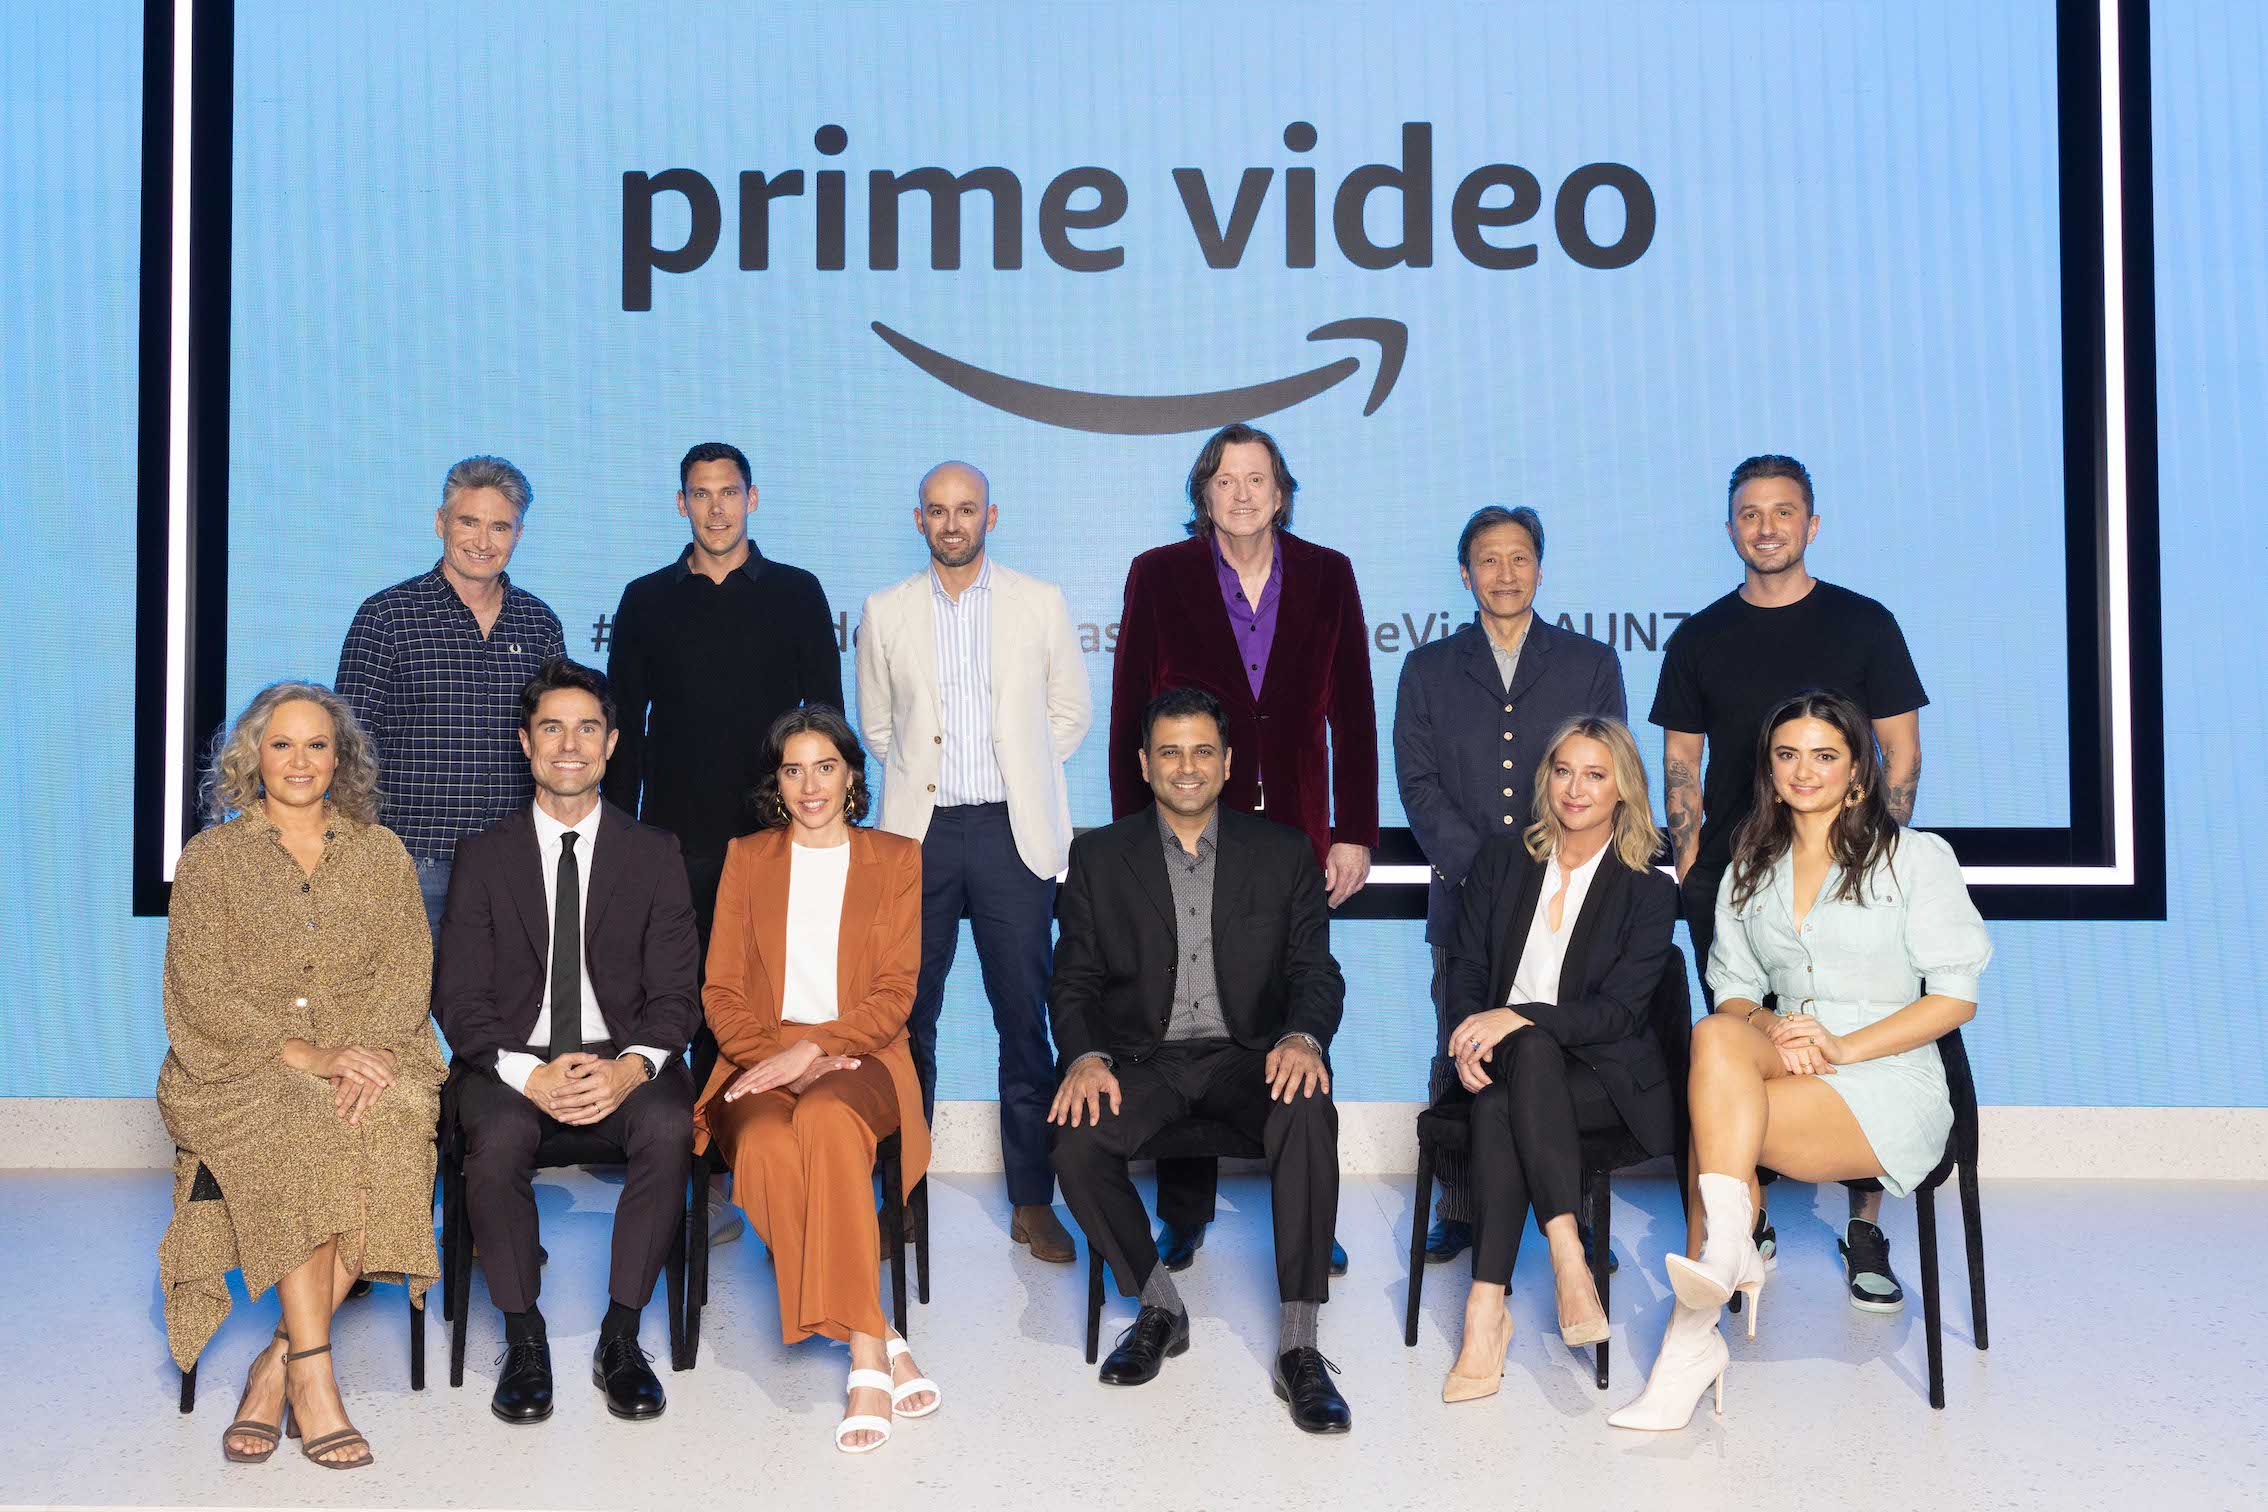 Prime Video Amazon Originals showcase stars